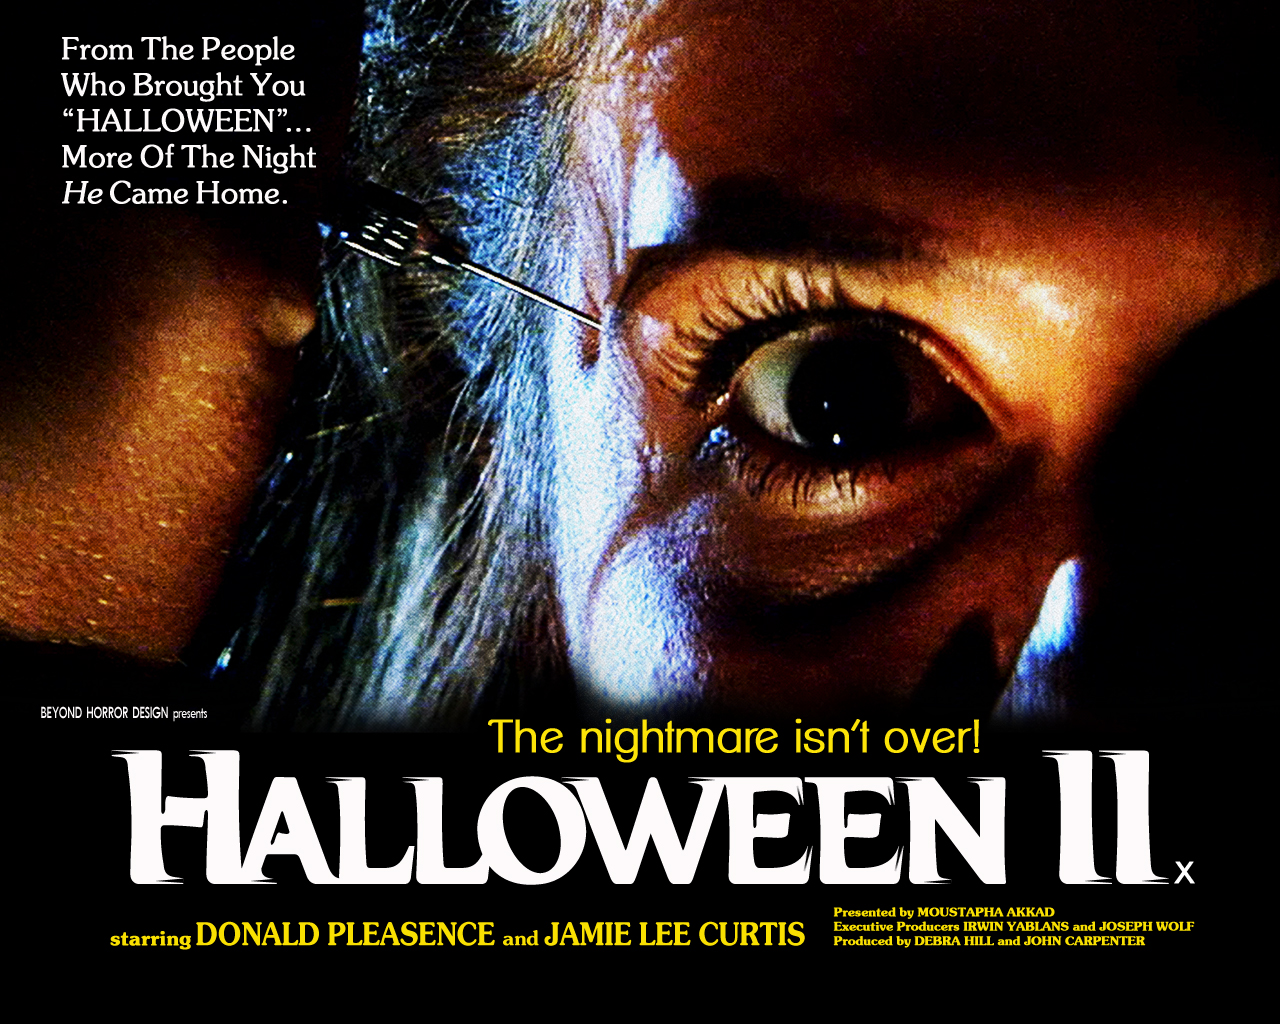 https://blogger.googleusercontent.com/img/b/R29vZ2xl/AVvXsEhfy0tLCyc9gvtd3IwoPgoLw4M7esI0Ss0n2bwECw90eTGRV70q2dqwZRpy78mtspF1FpXjzjr23u7cQAmiIogkswcBqtlXS_E2XFixDTZ7bXwIujw1p5-0AE-B1h9ugsPOd41gY6GIaRxw/s1600/Halloween+II+1981+Poster+Wallpaper+Beyond+Horror+Design.jpg